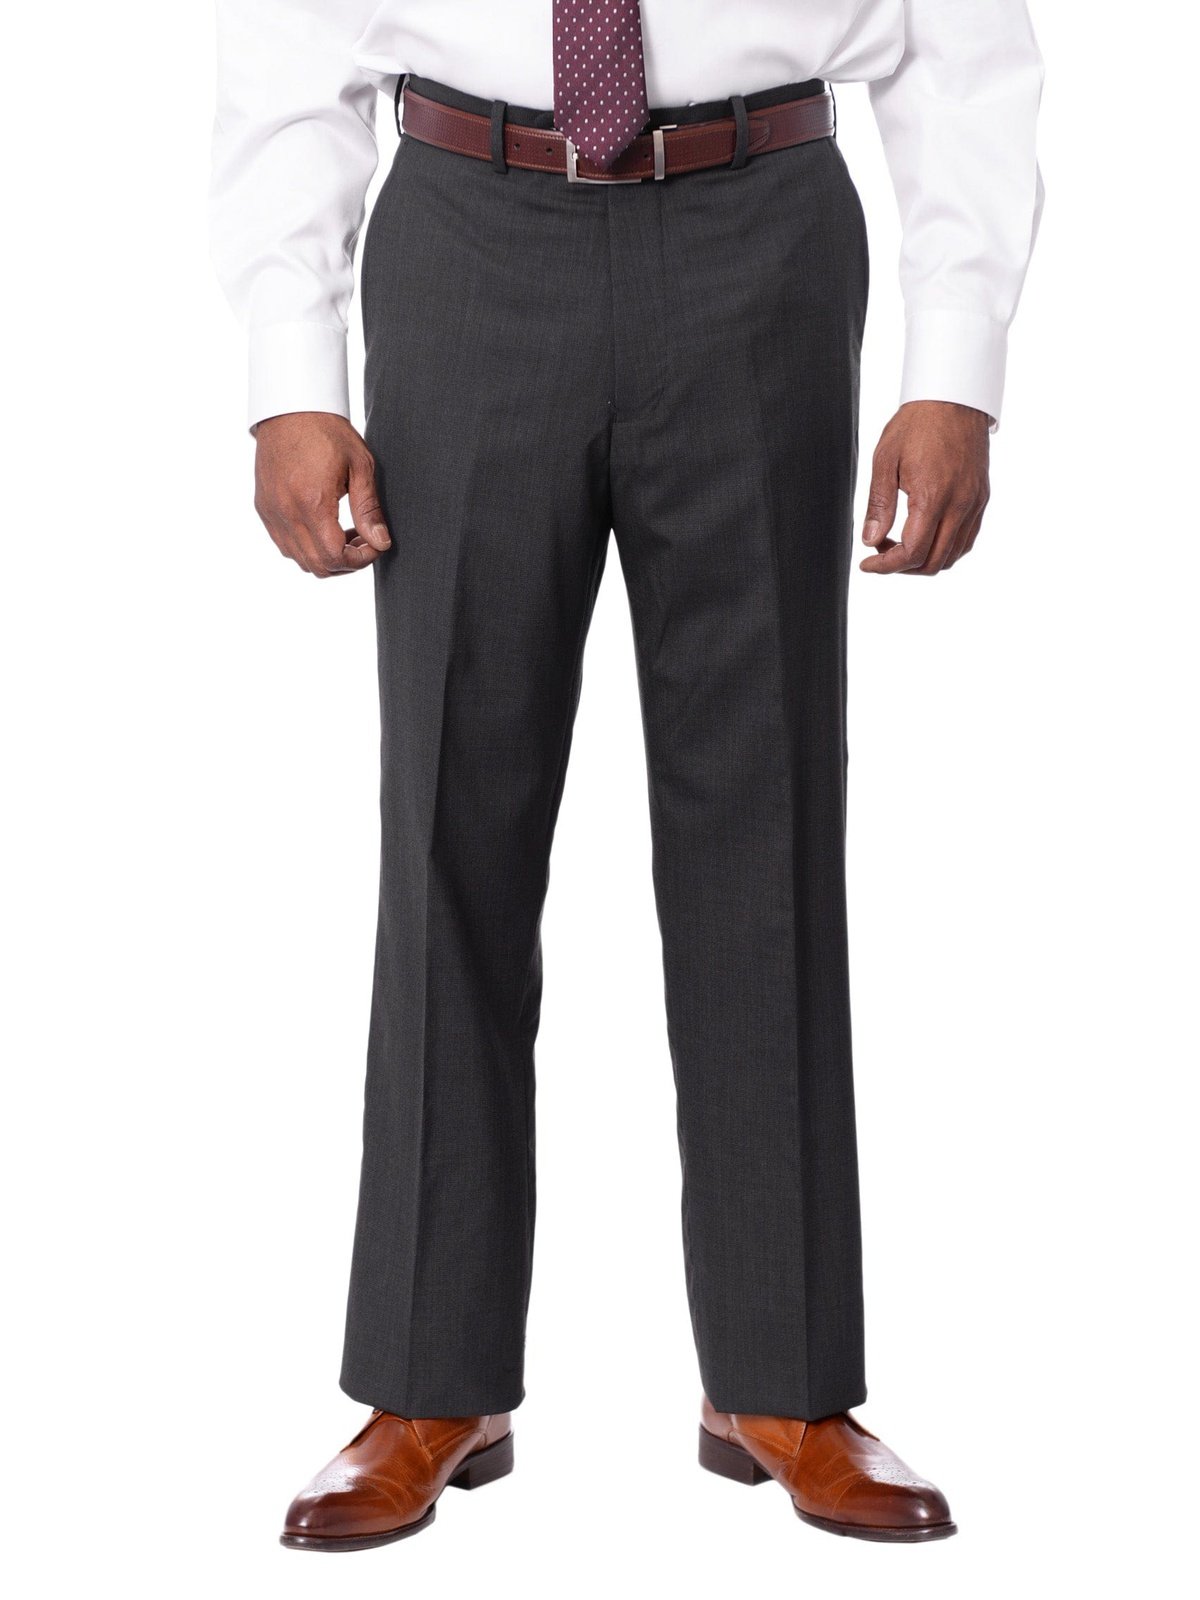 Prontomoda TWO PIECE SUITS Prontomoda Mens Solid Charcoal Gray 100% Merino Wool Regular Fit Suit